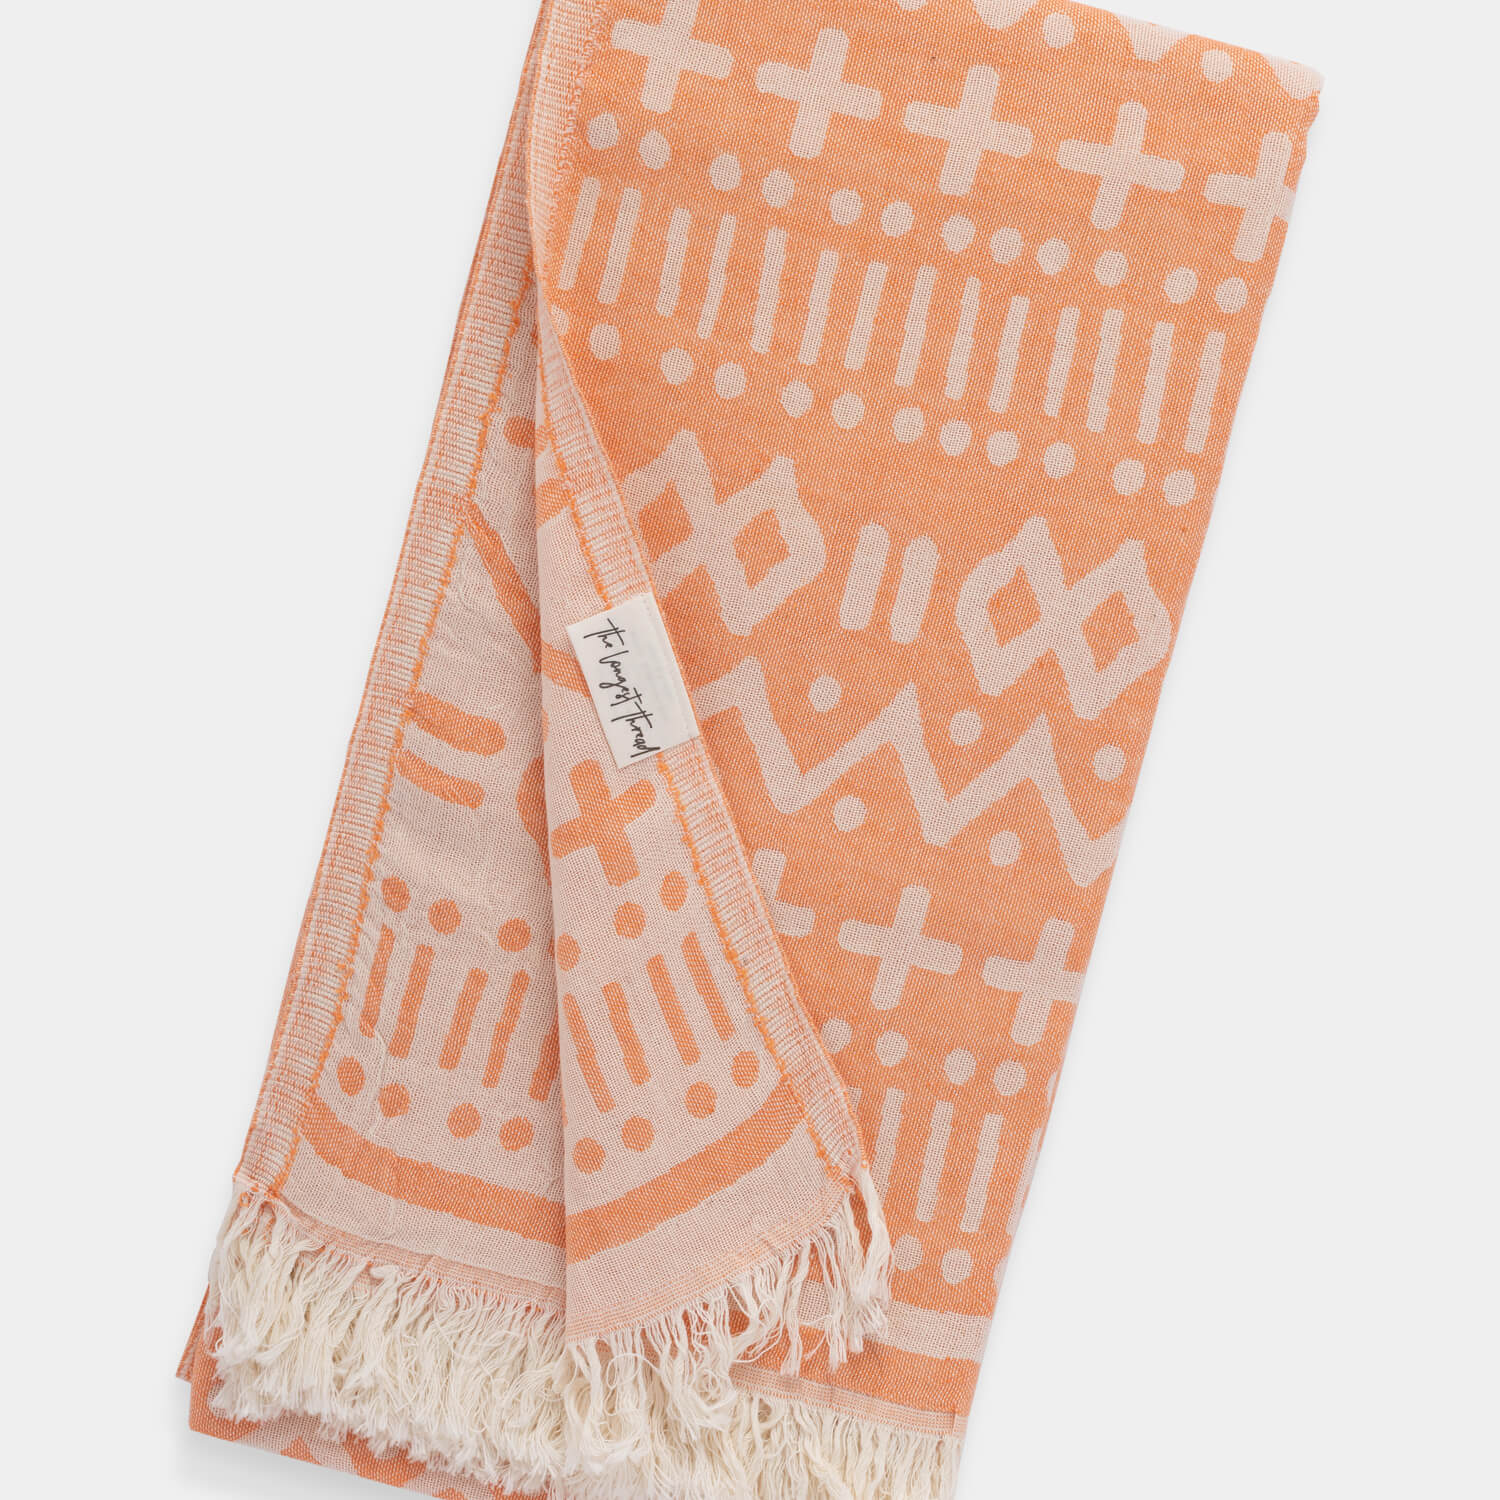 Maghreb Orange Towel Image 3